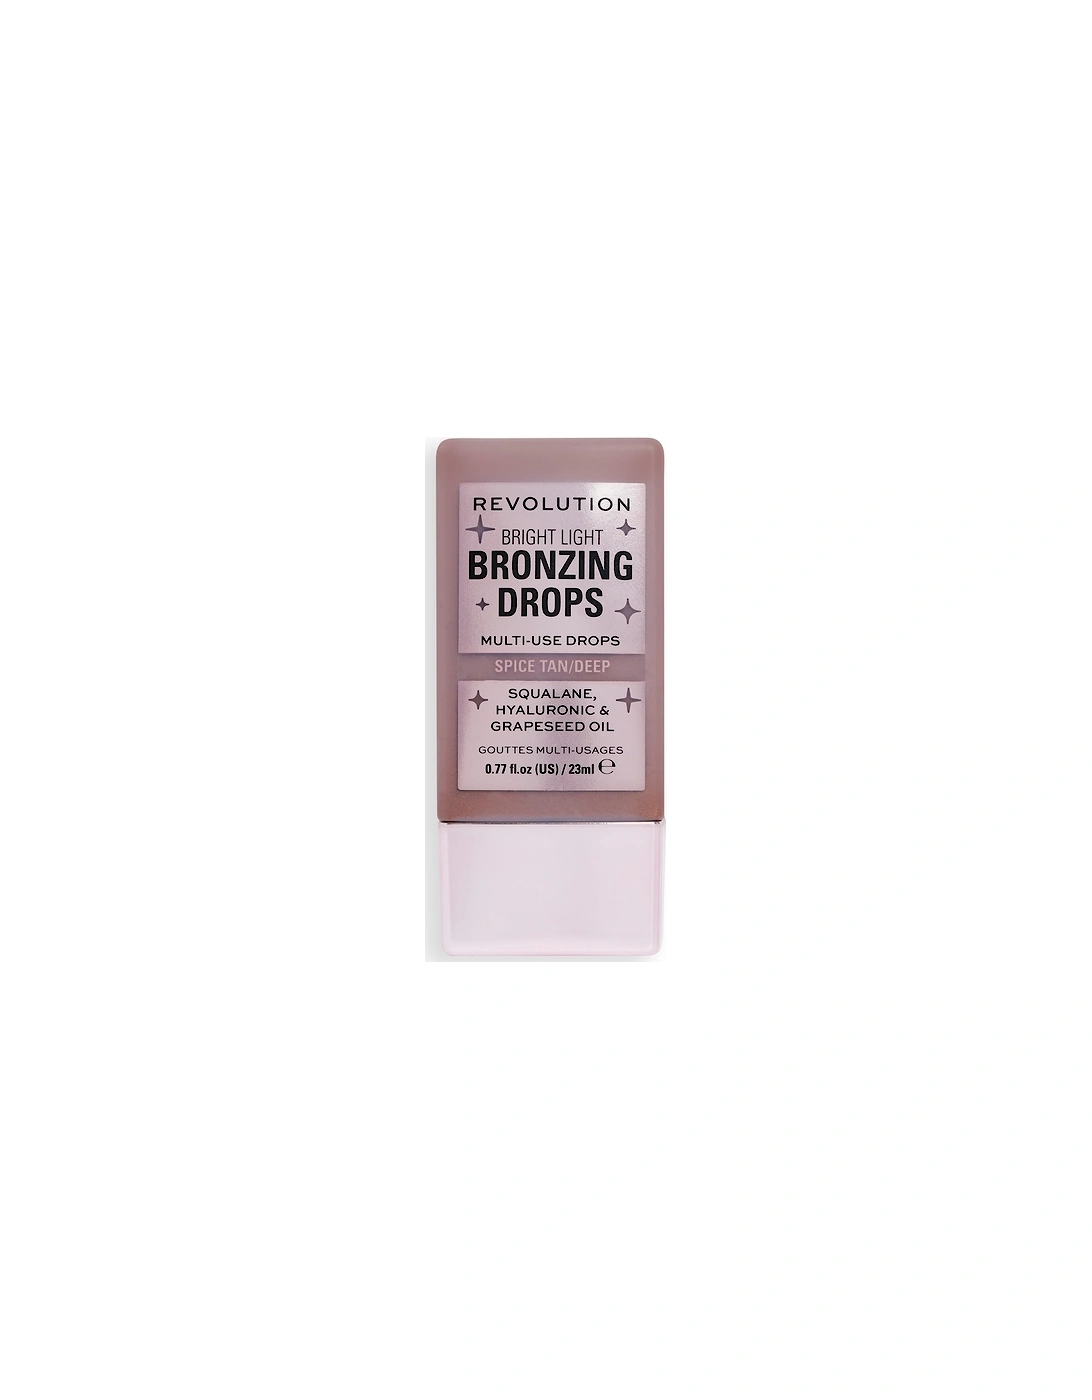 Makeup Bright Light Bronzing Drops - Deep Bronze Spice, 2 of 1